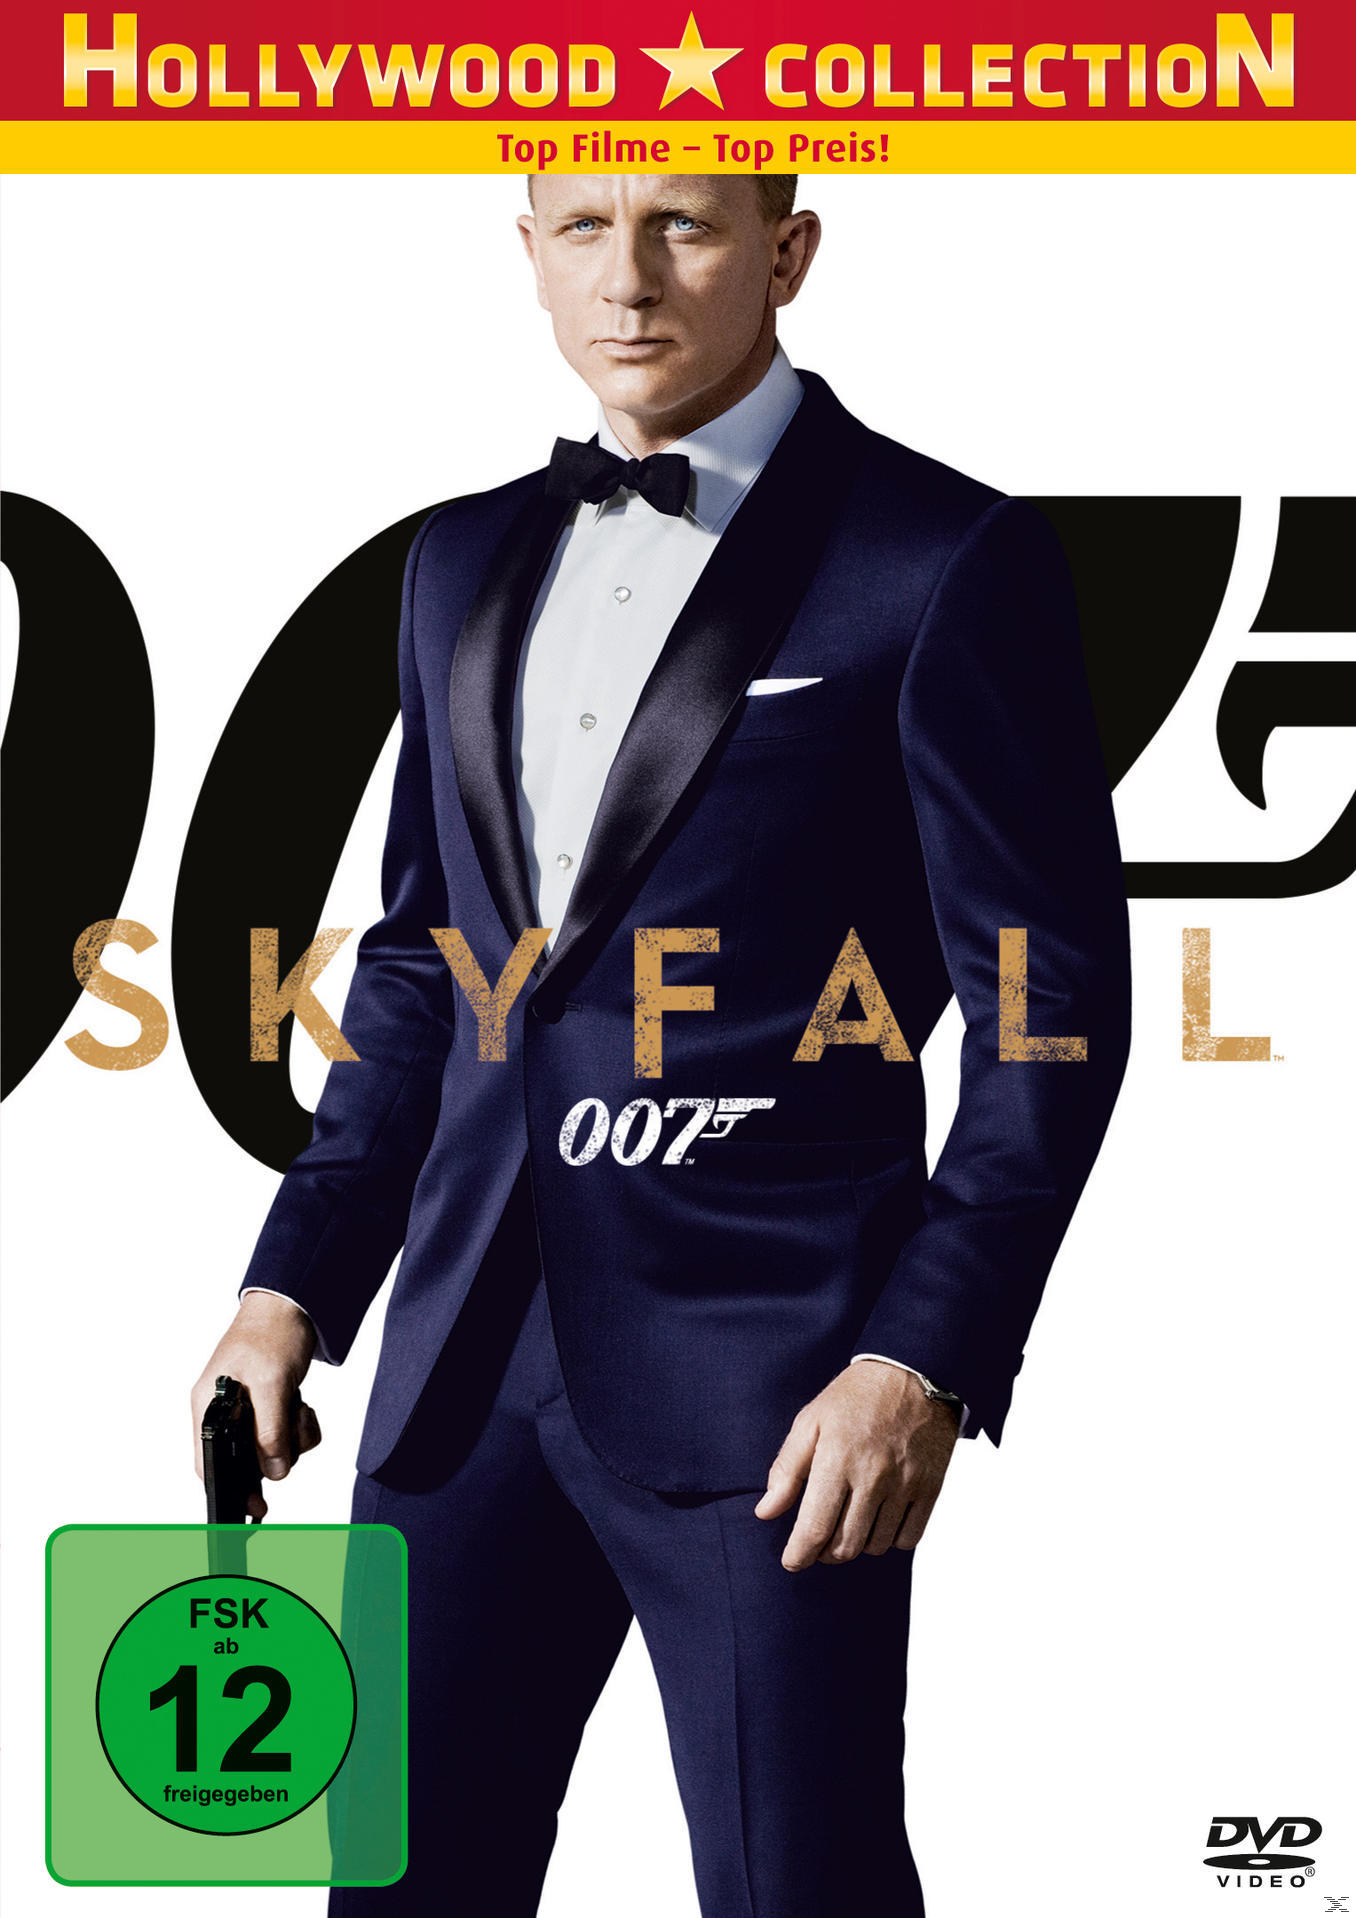 James Skyfall DVD 007 Bond -